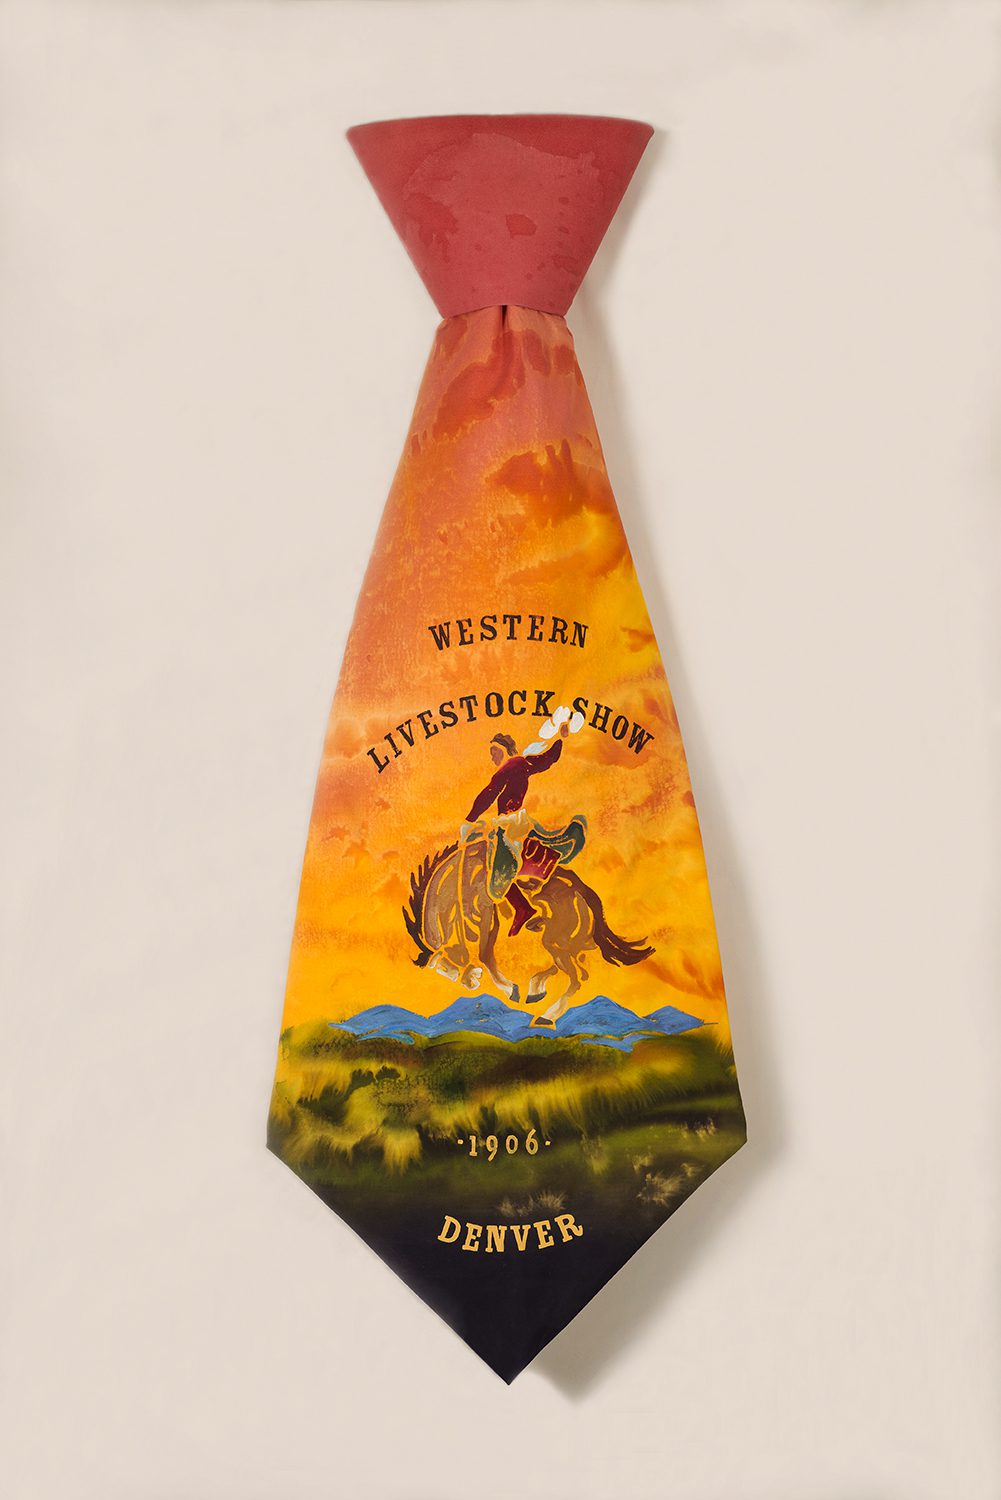 A custom tie